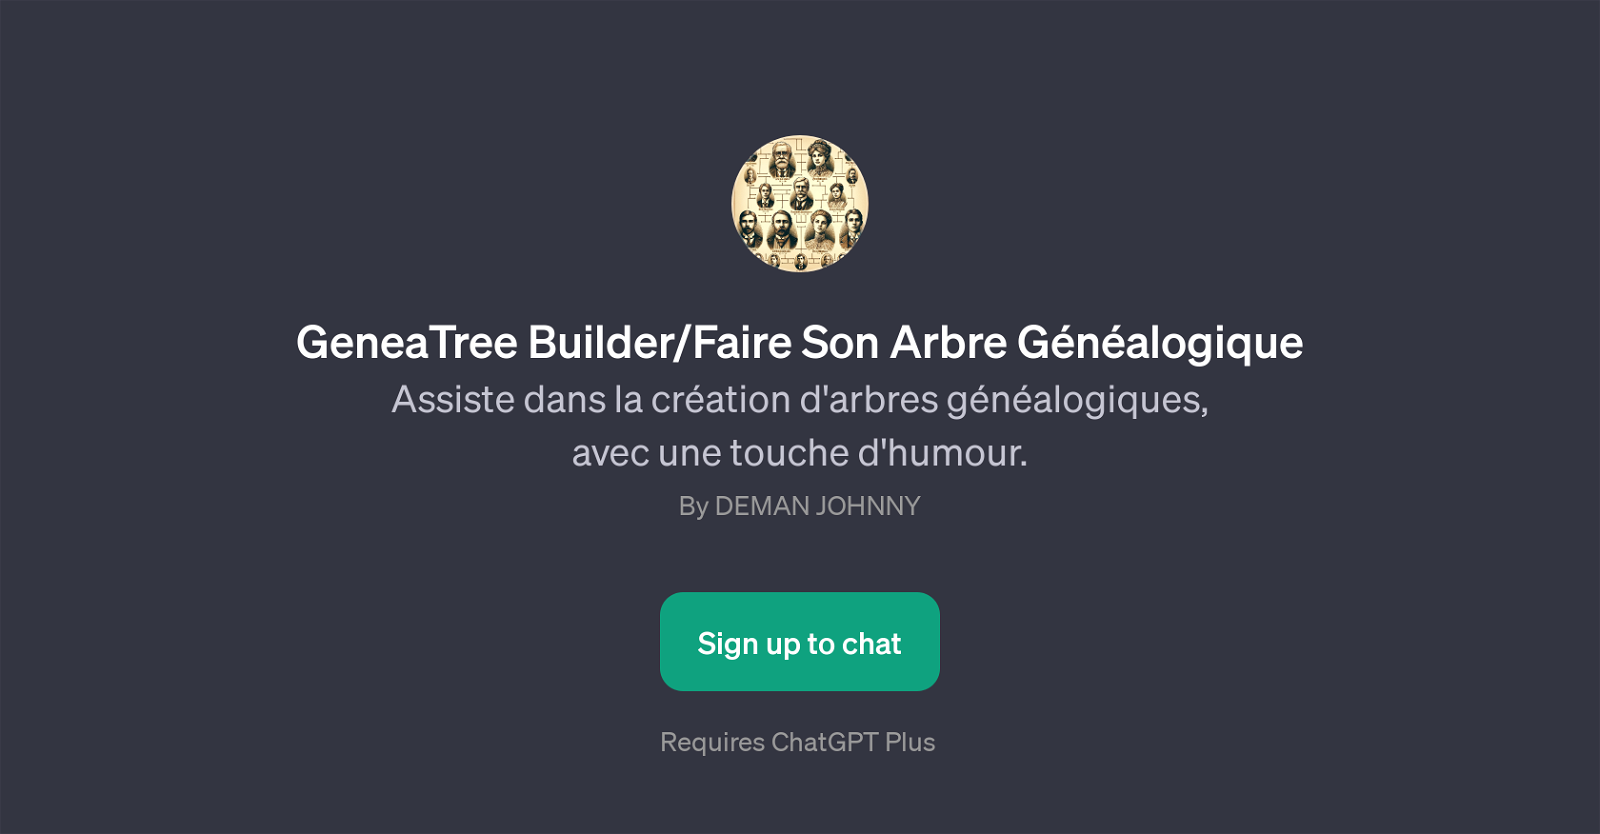 GeneaTree Builder/Faire Son Arbre Gnalogique website